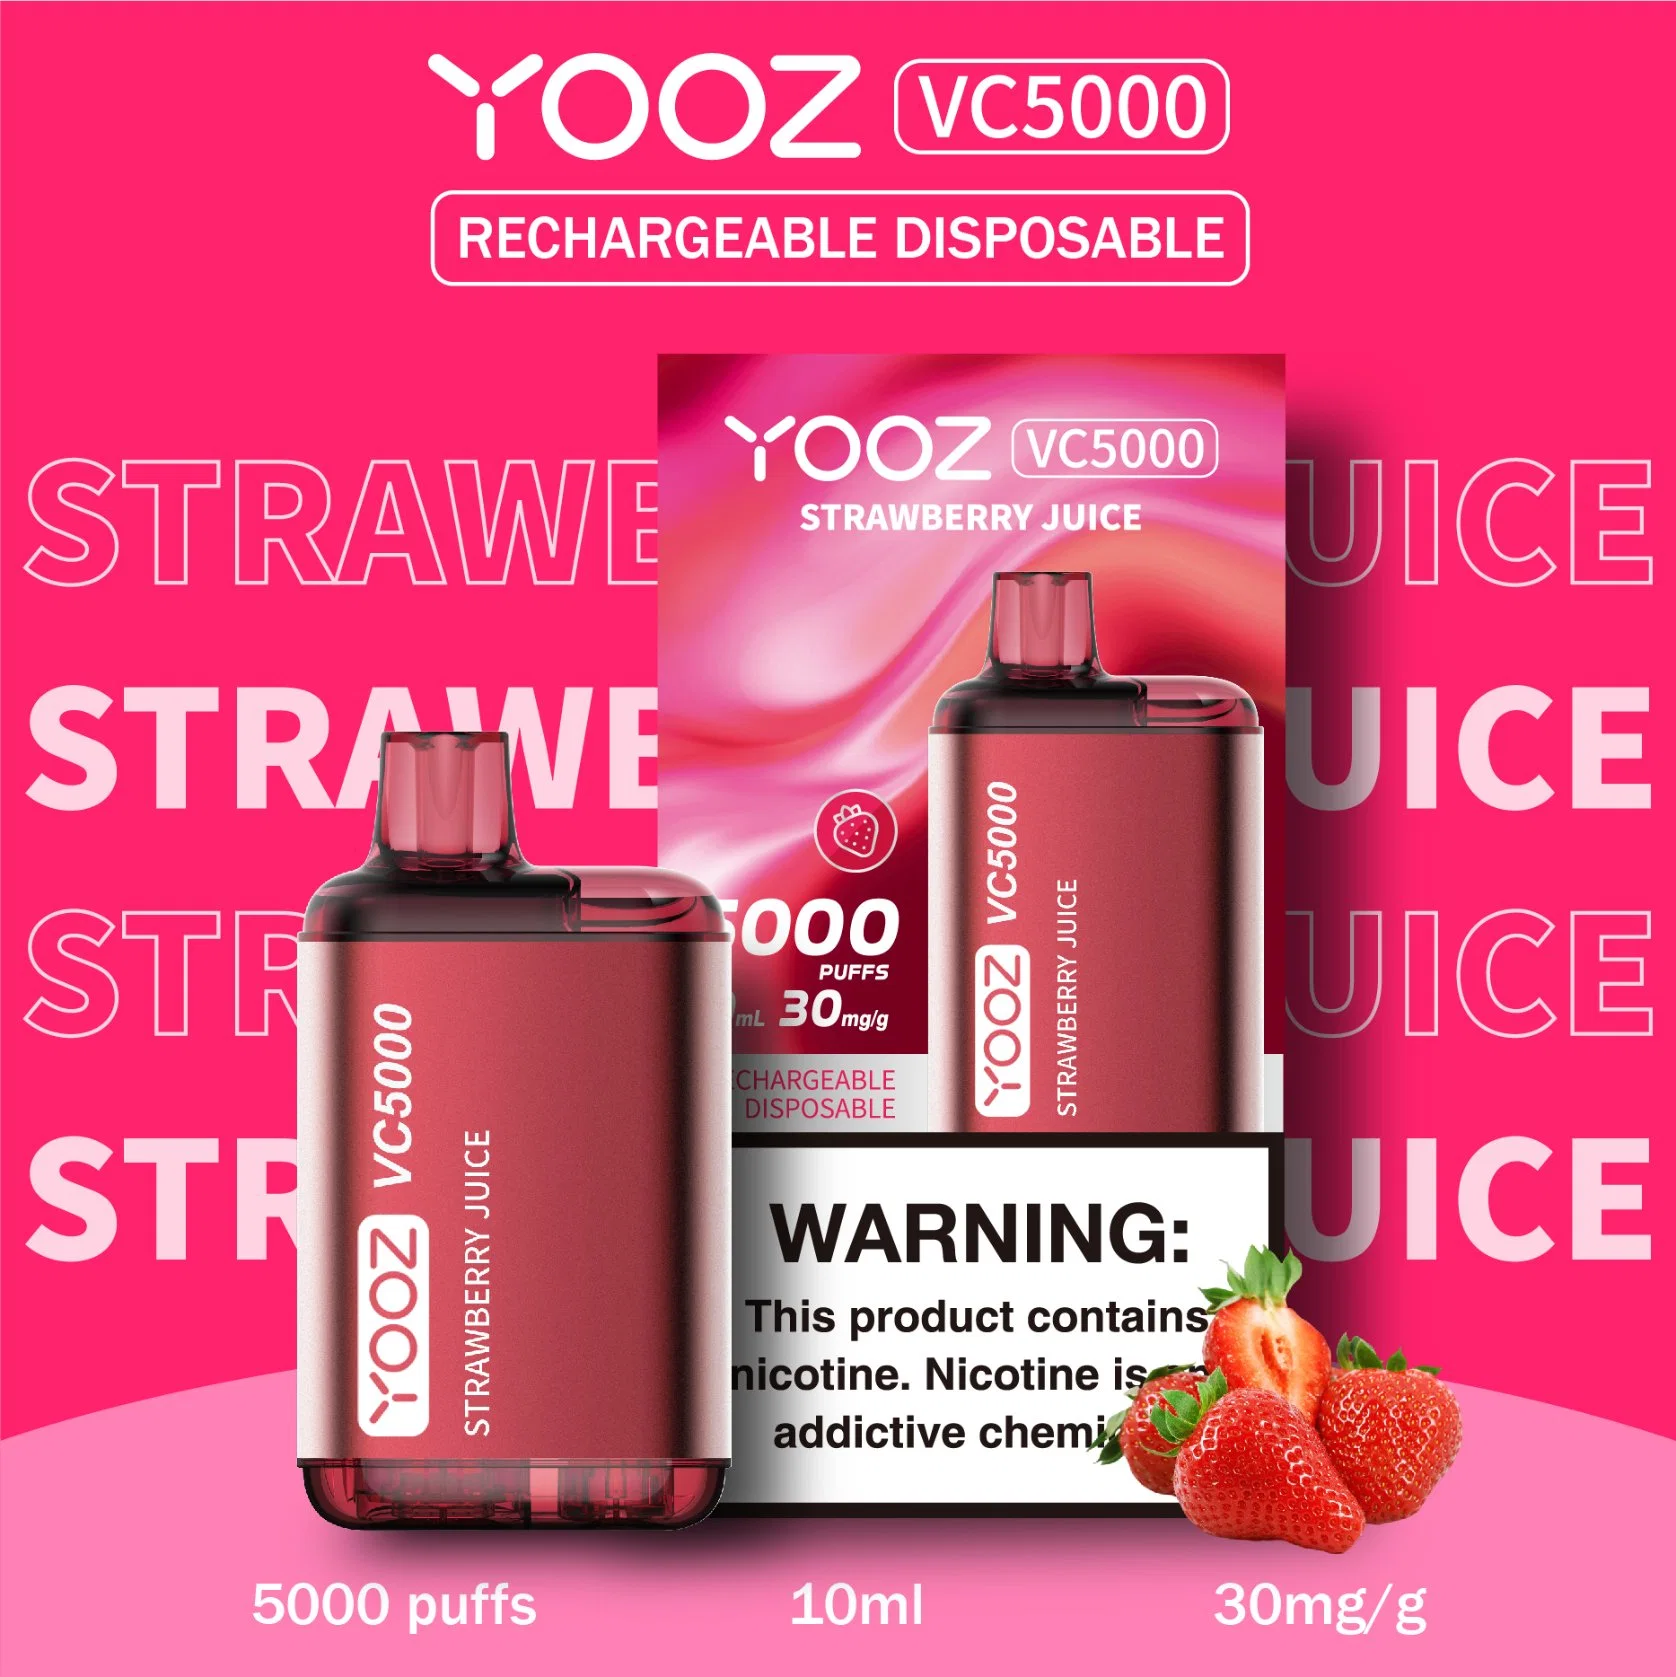 2023yooz New Product, Original Disposable Vape Yooz Vc5000, Fruit Flavor, Rechargeable, Shenzhen Wholesale Electronic Cigarette